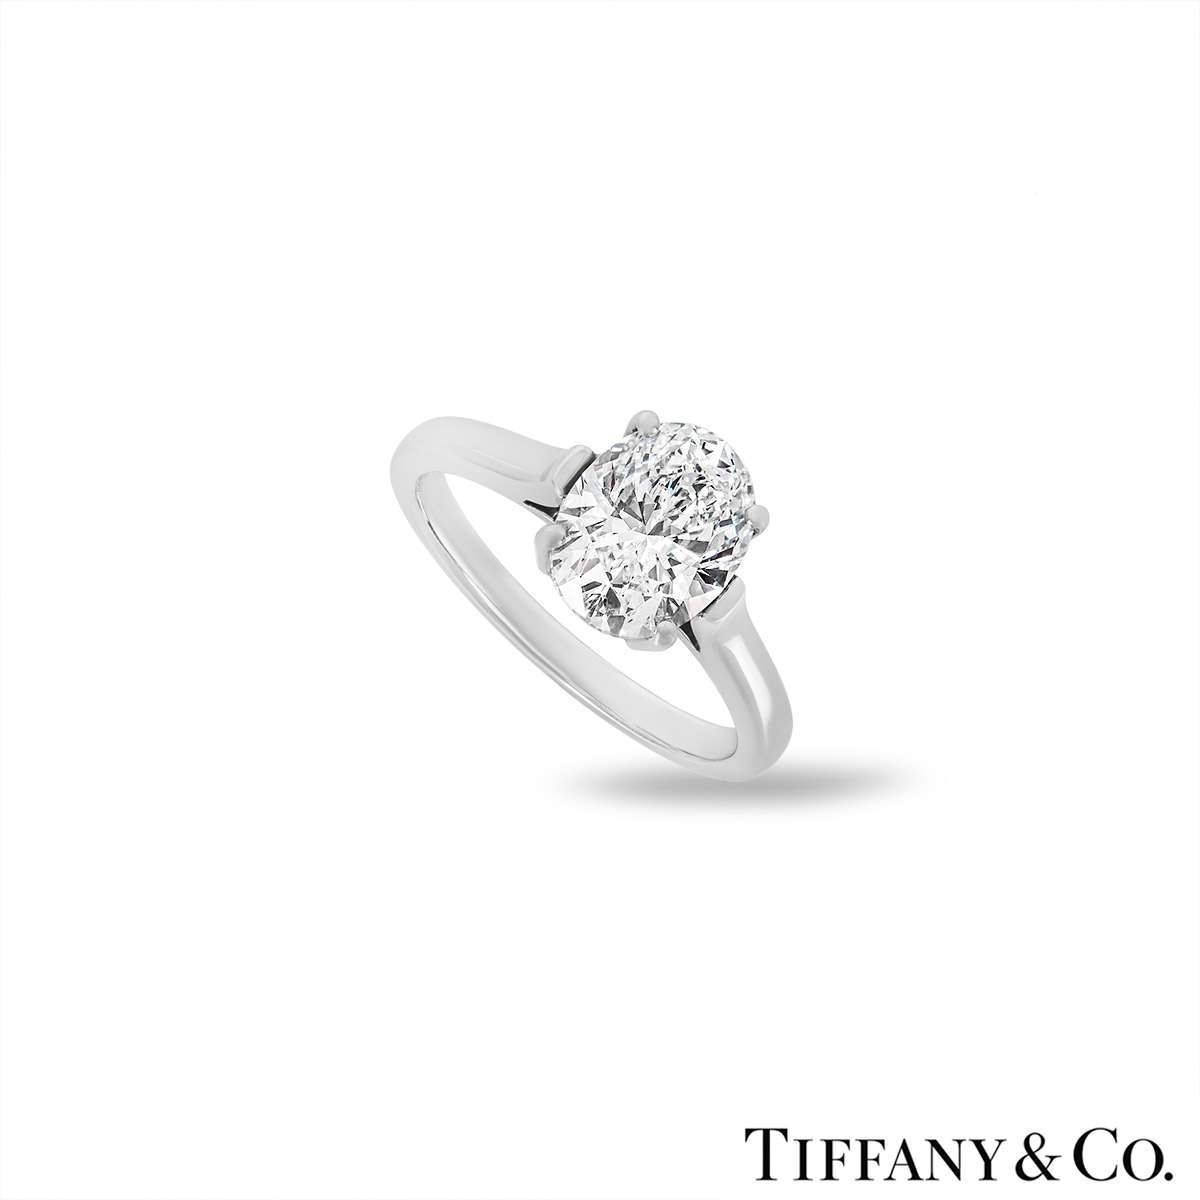 Tiffany & Co. Platinum Oval Diamond Ring 2.06ct D/VVS2